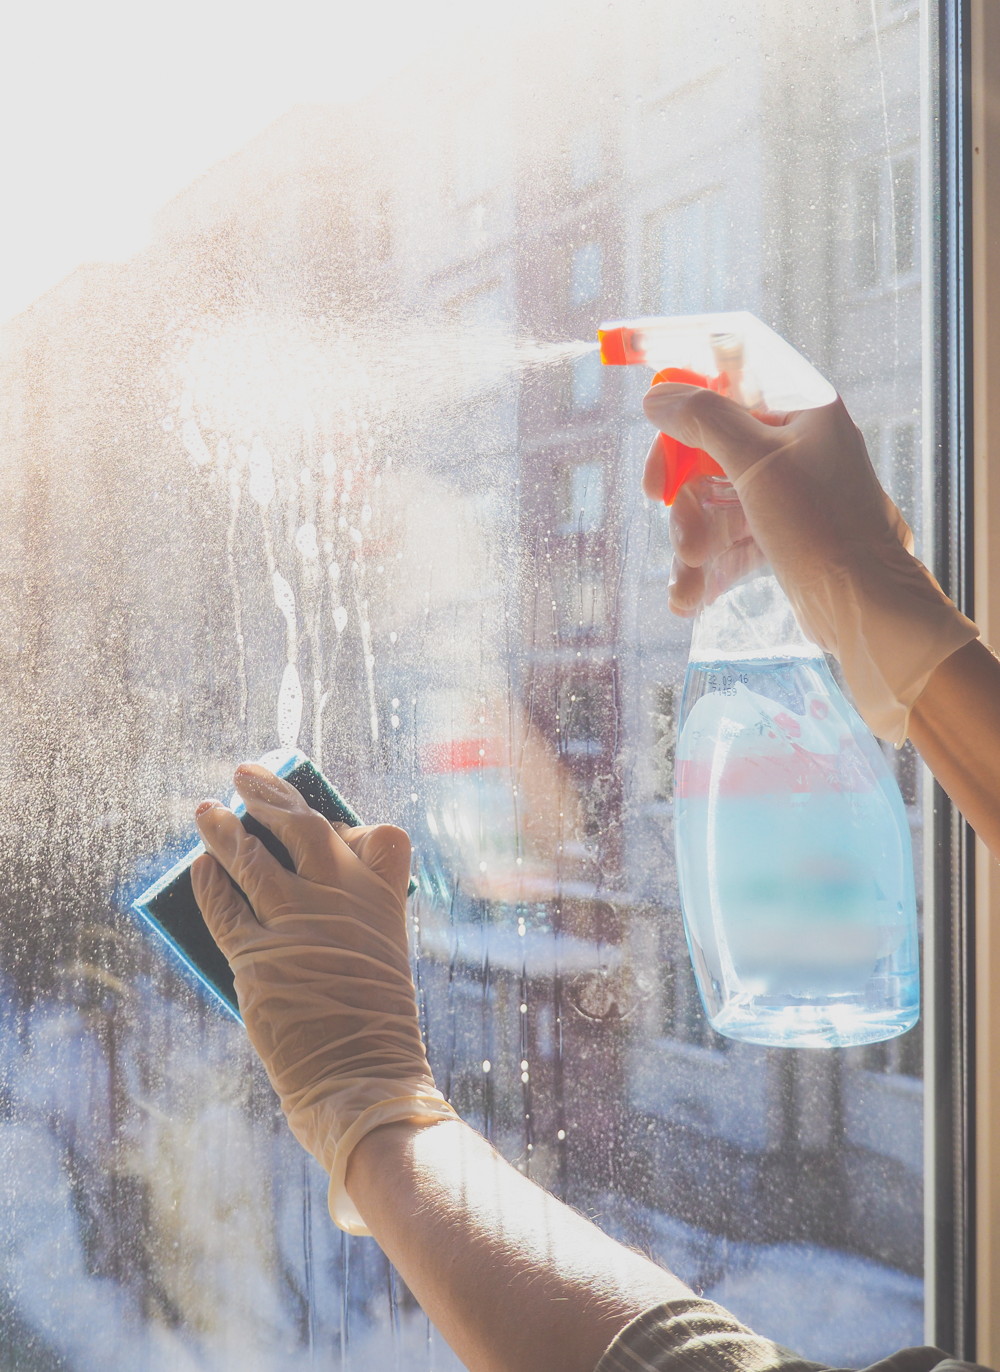 Mycie okien jak myć okna bez smug? Poradnik krok po kroku